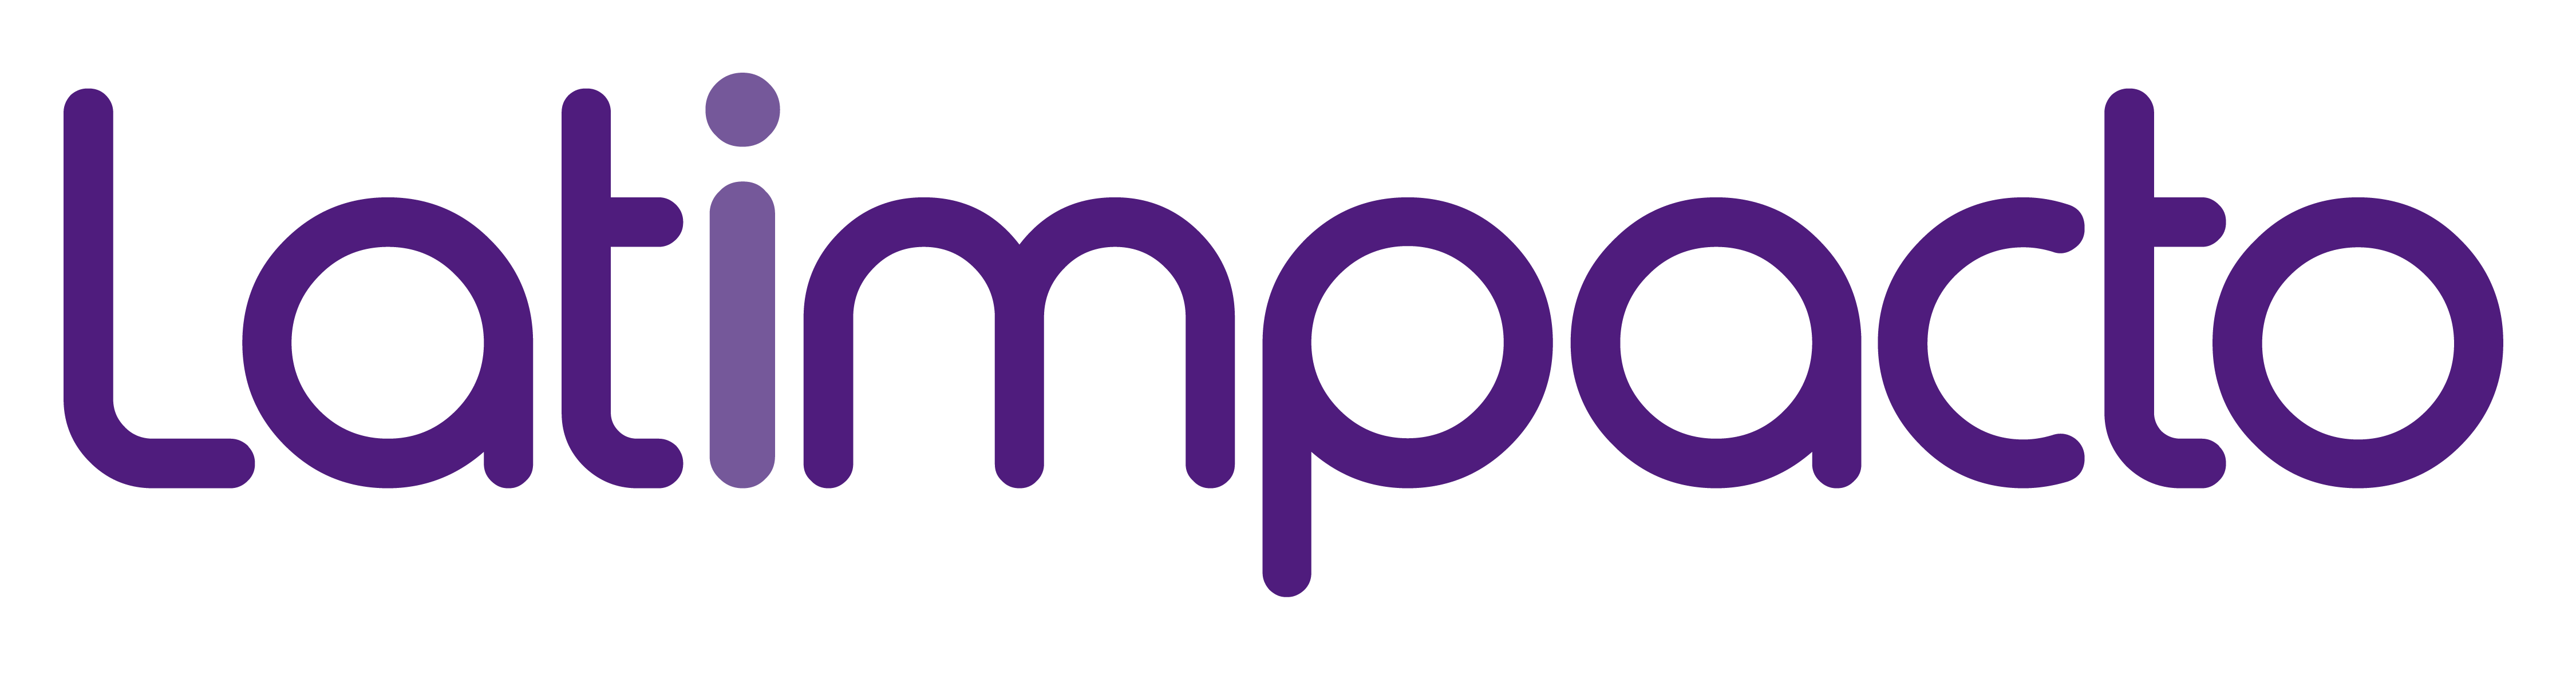 Cor do logotipo da Latimpacto sem fundo